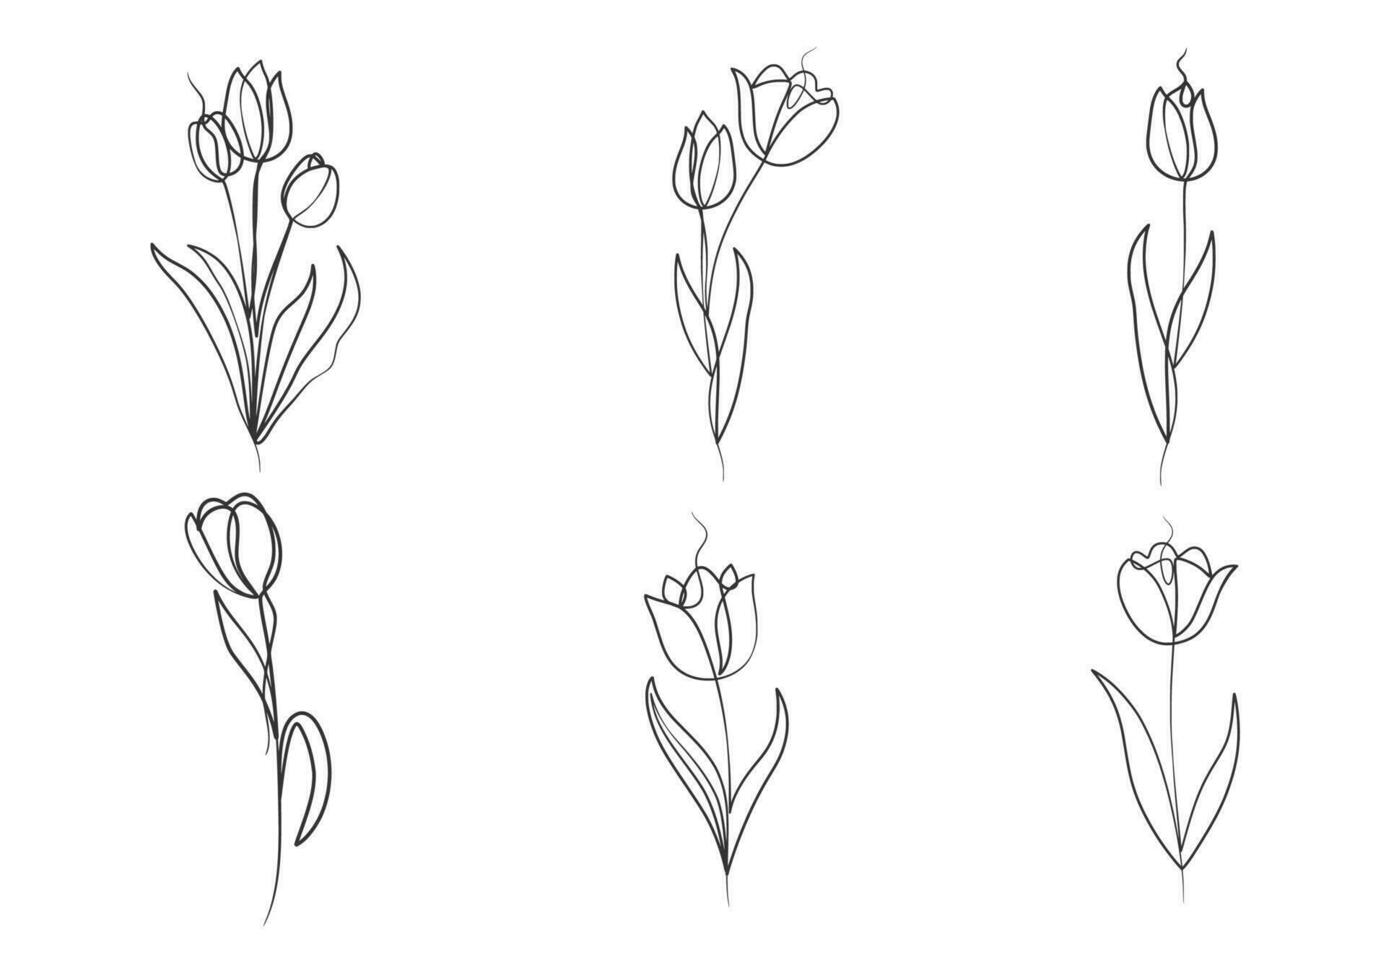 kontinuerlig ett linje konst teckning av skönhet tulpaner blomma vektor